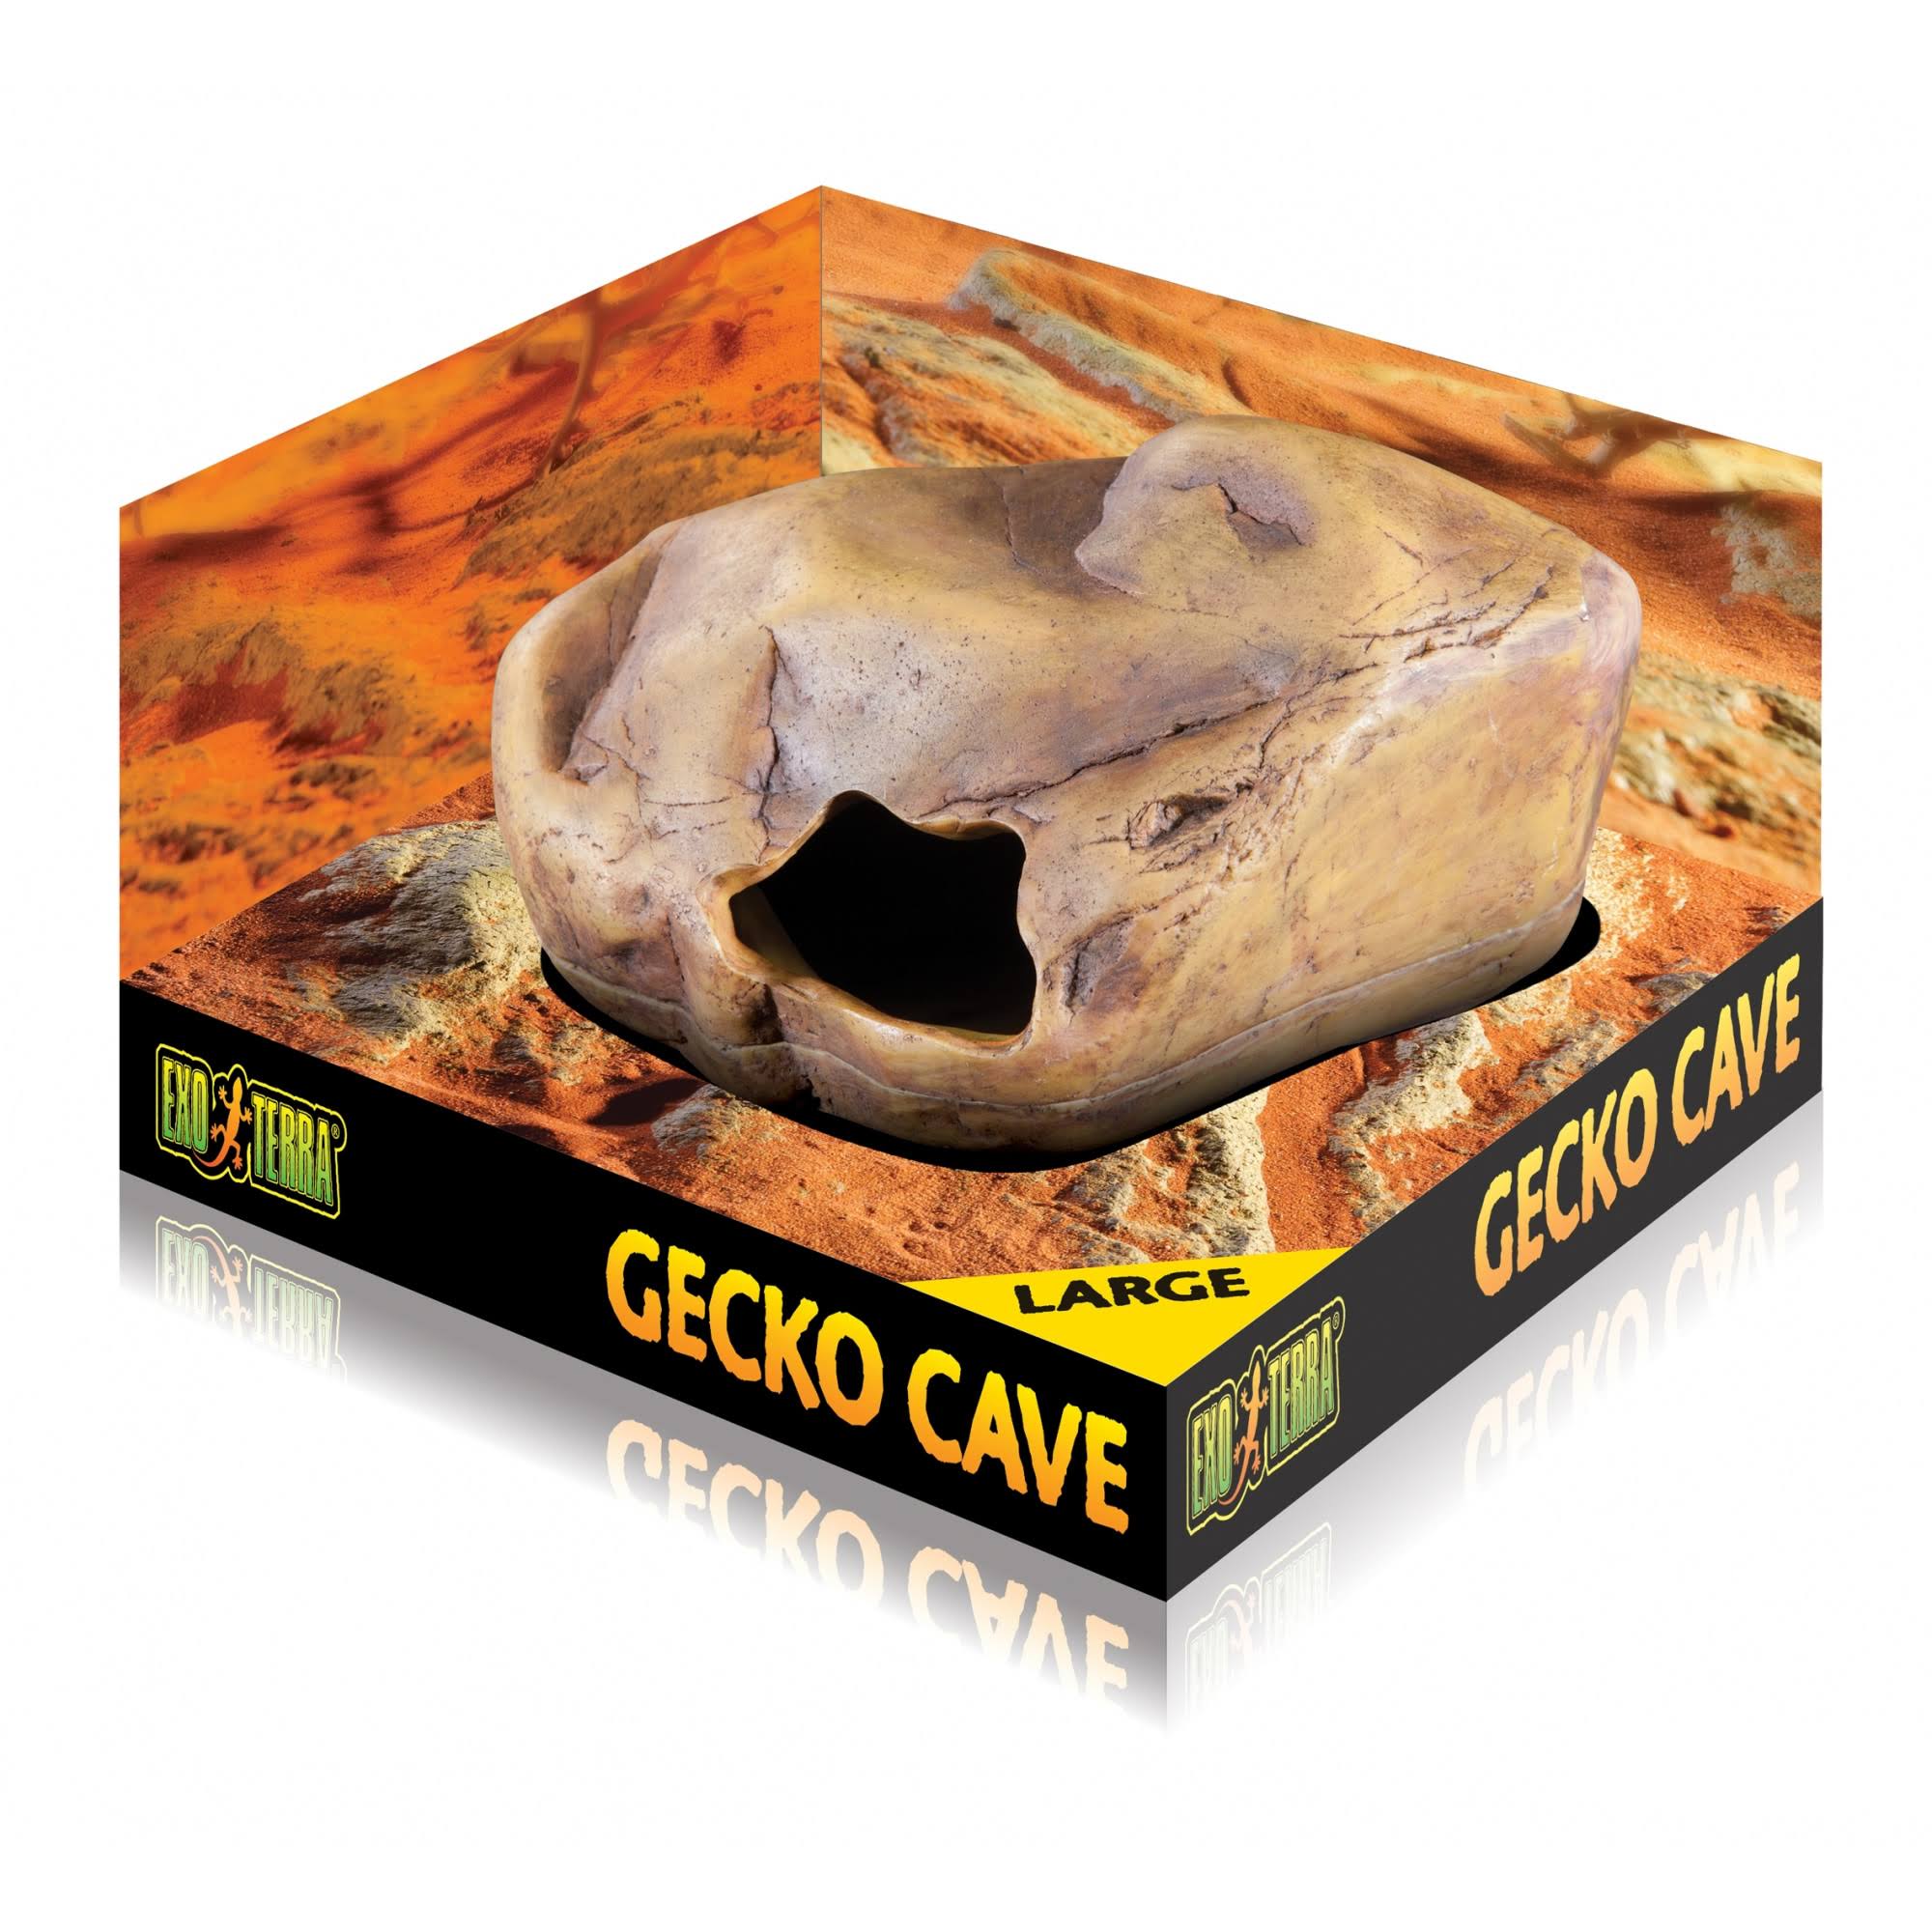 Exo-terra Gecko Cave - Large